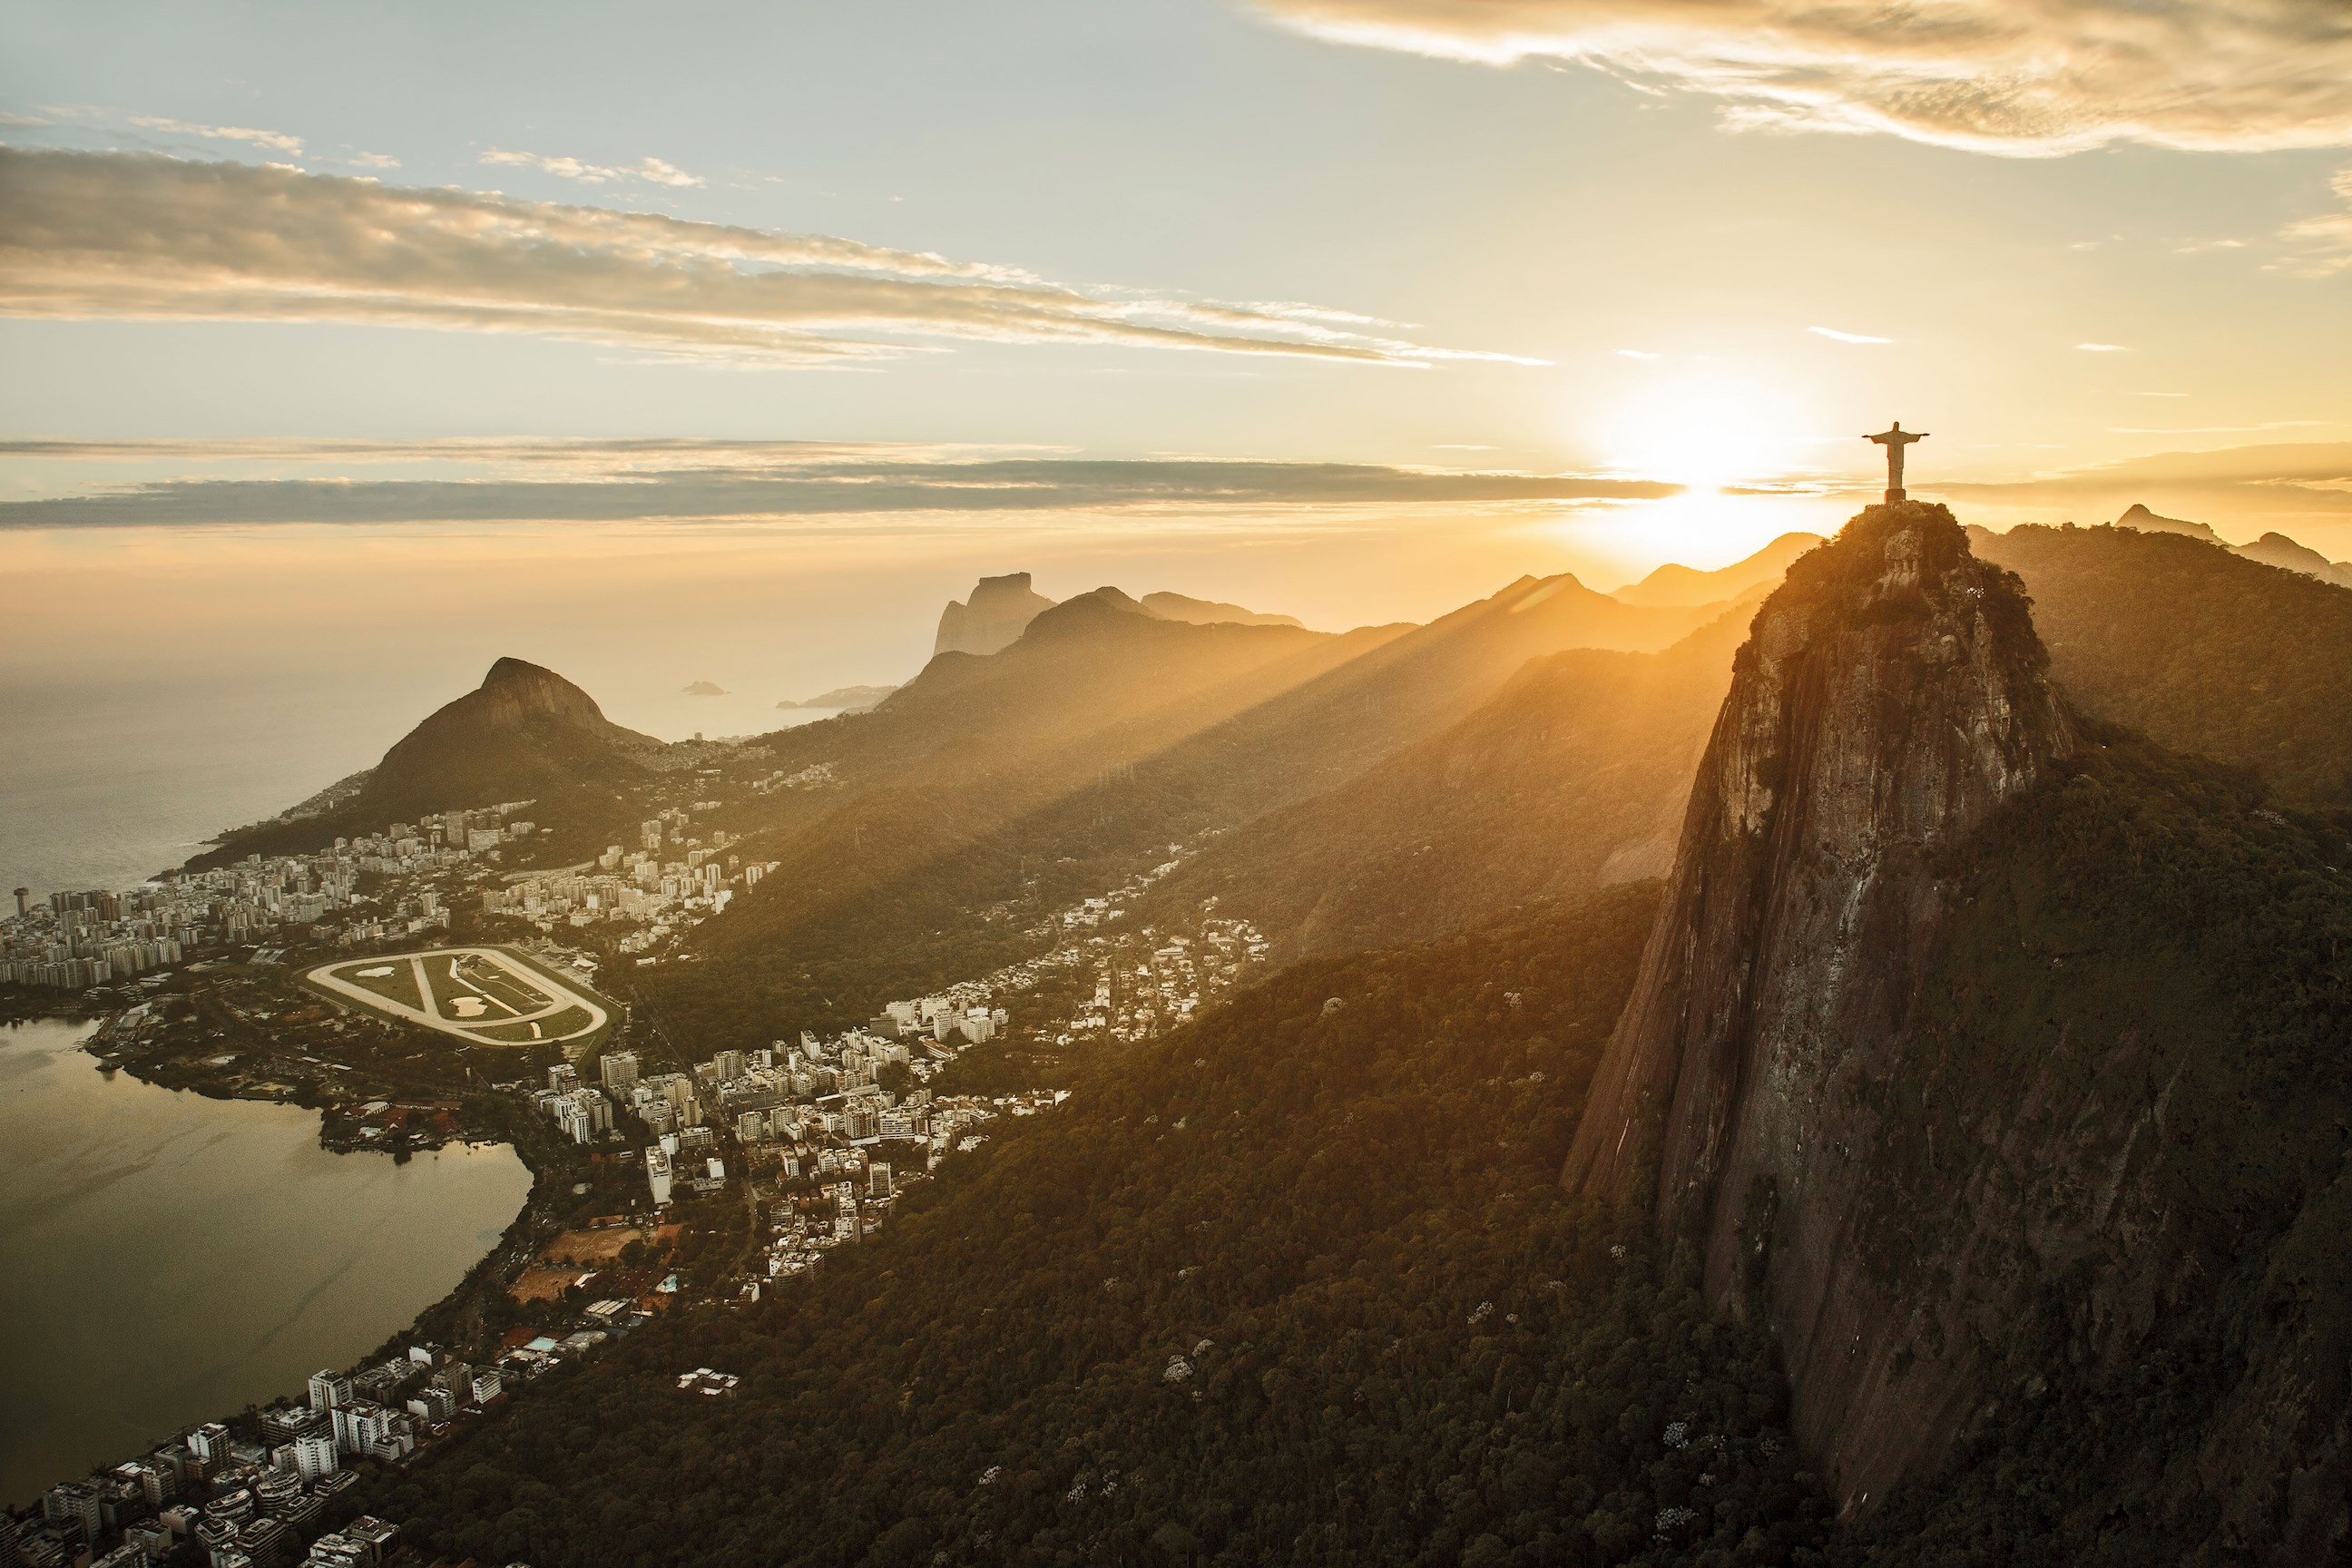 THE 10 BEST South American Restaurants in Rio de Janeiro (2023)